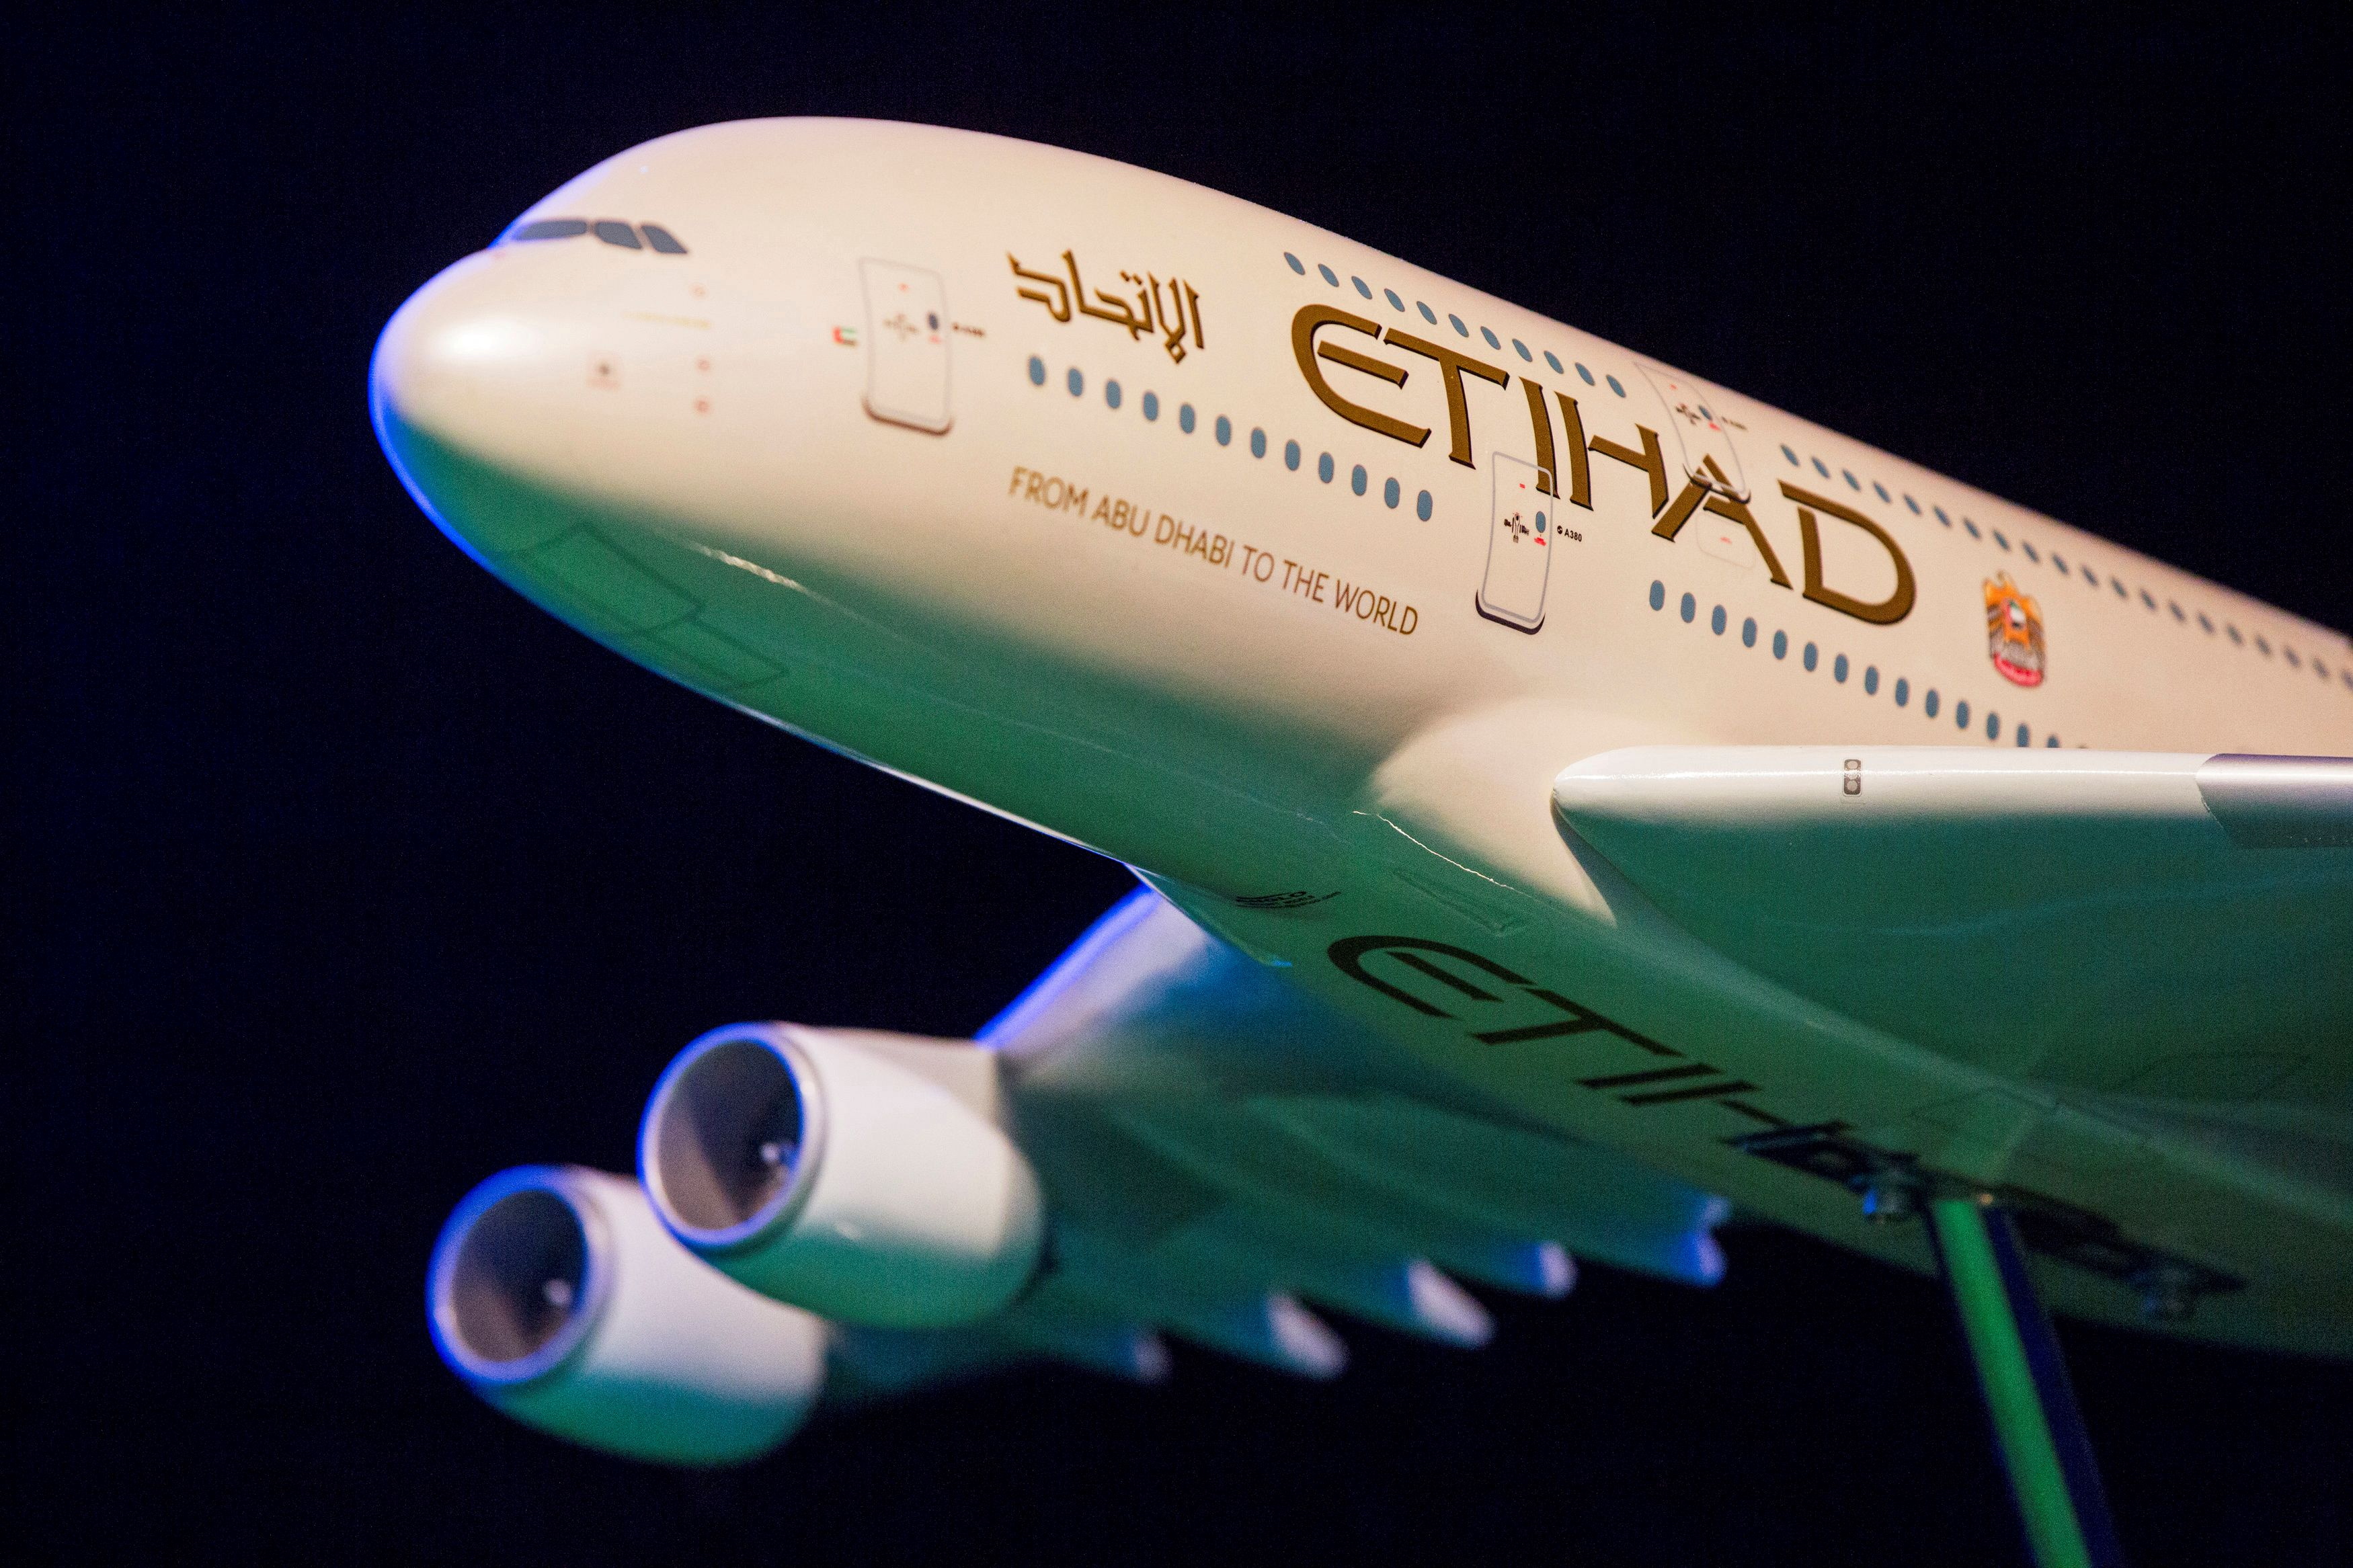 A model Etihad Airways plane is seen on stage in New York, U.S. November 13, 2014.  REUTERS/Lucas Jackson/File Photo